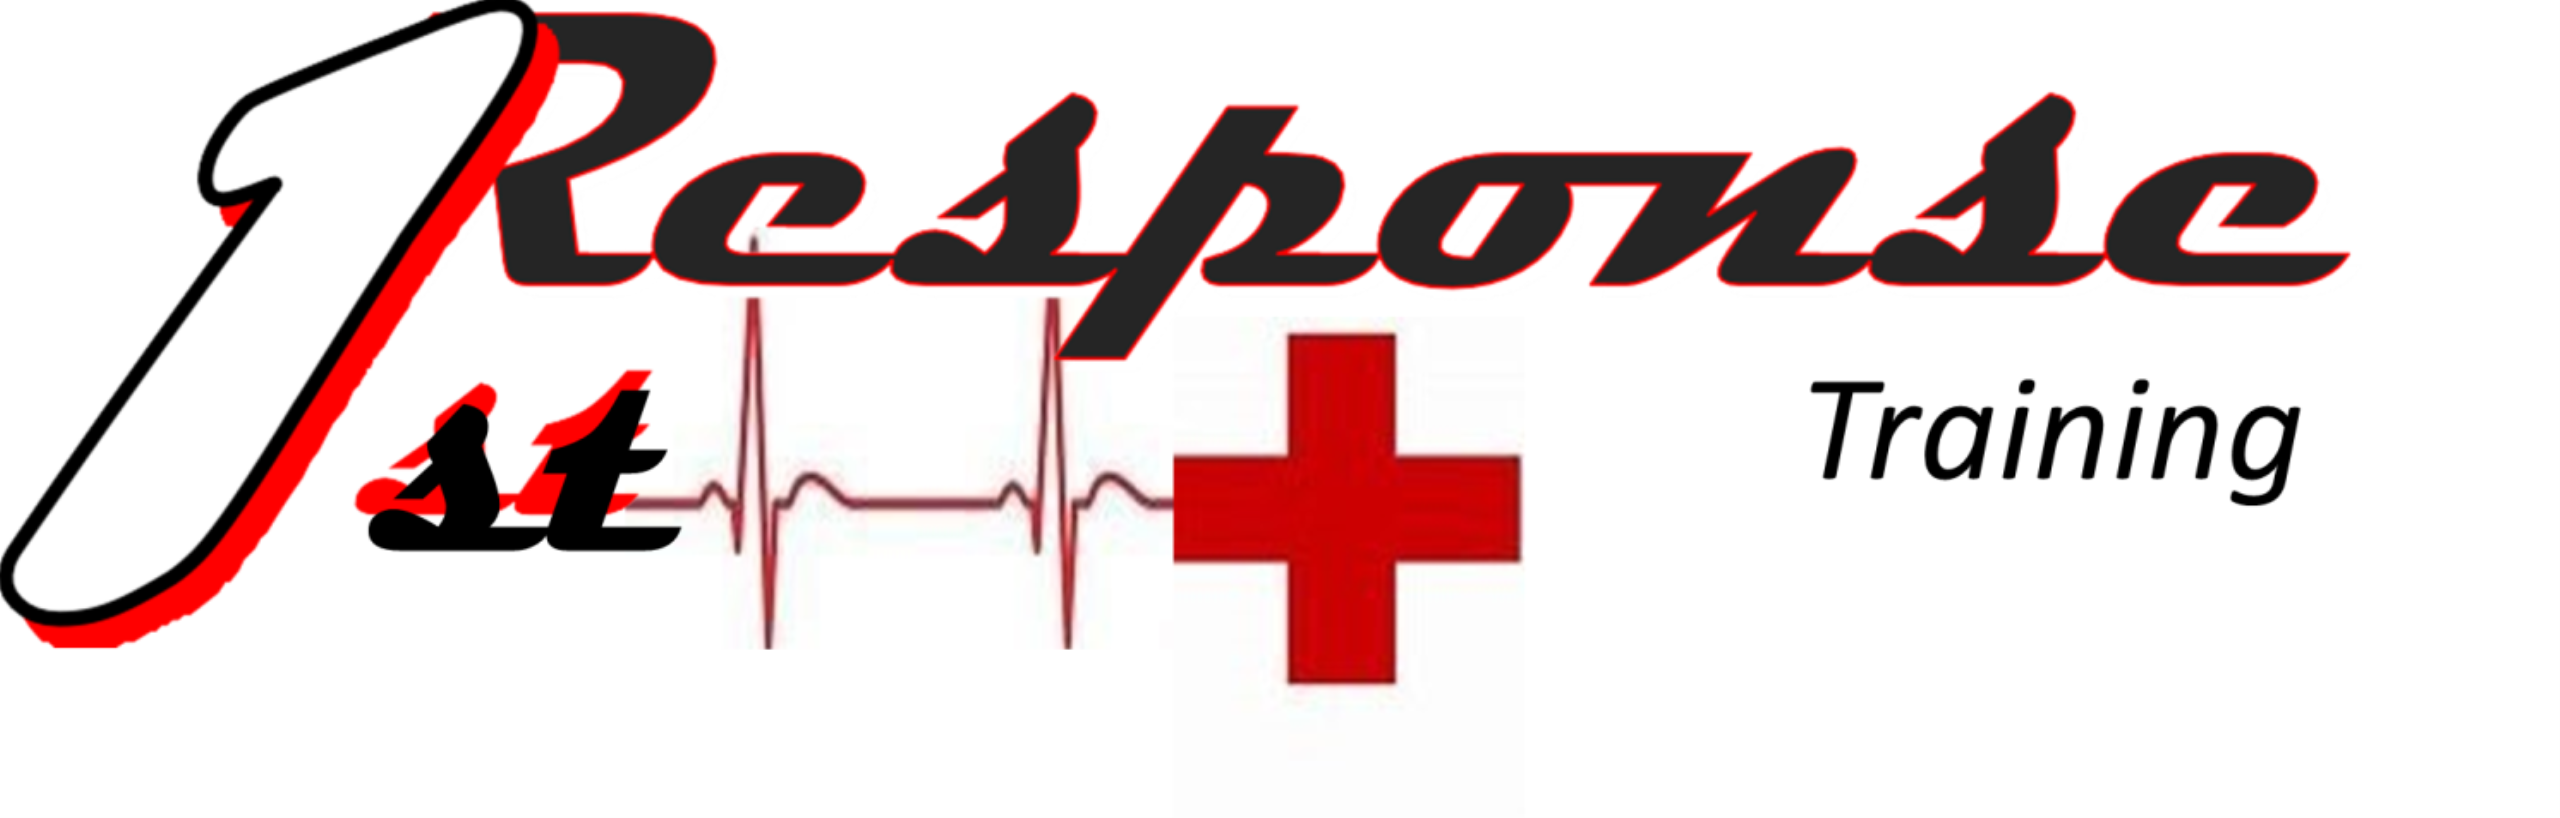 1st Response Training, LLC Logo